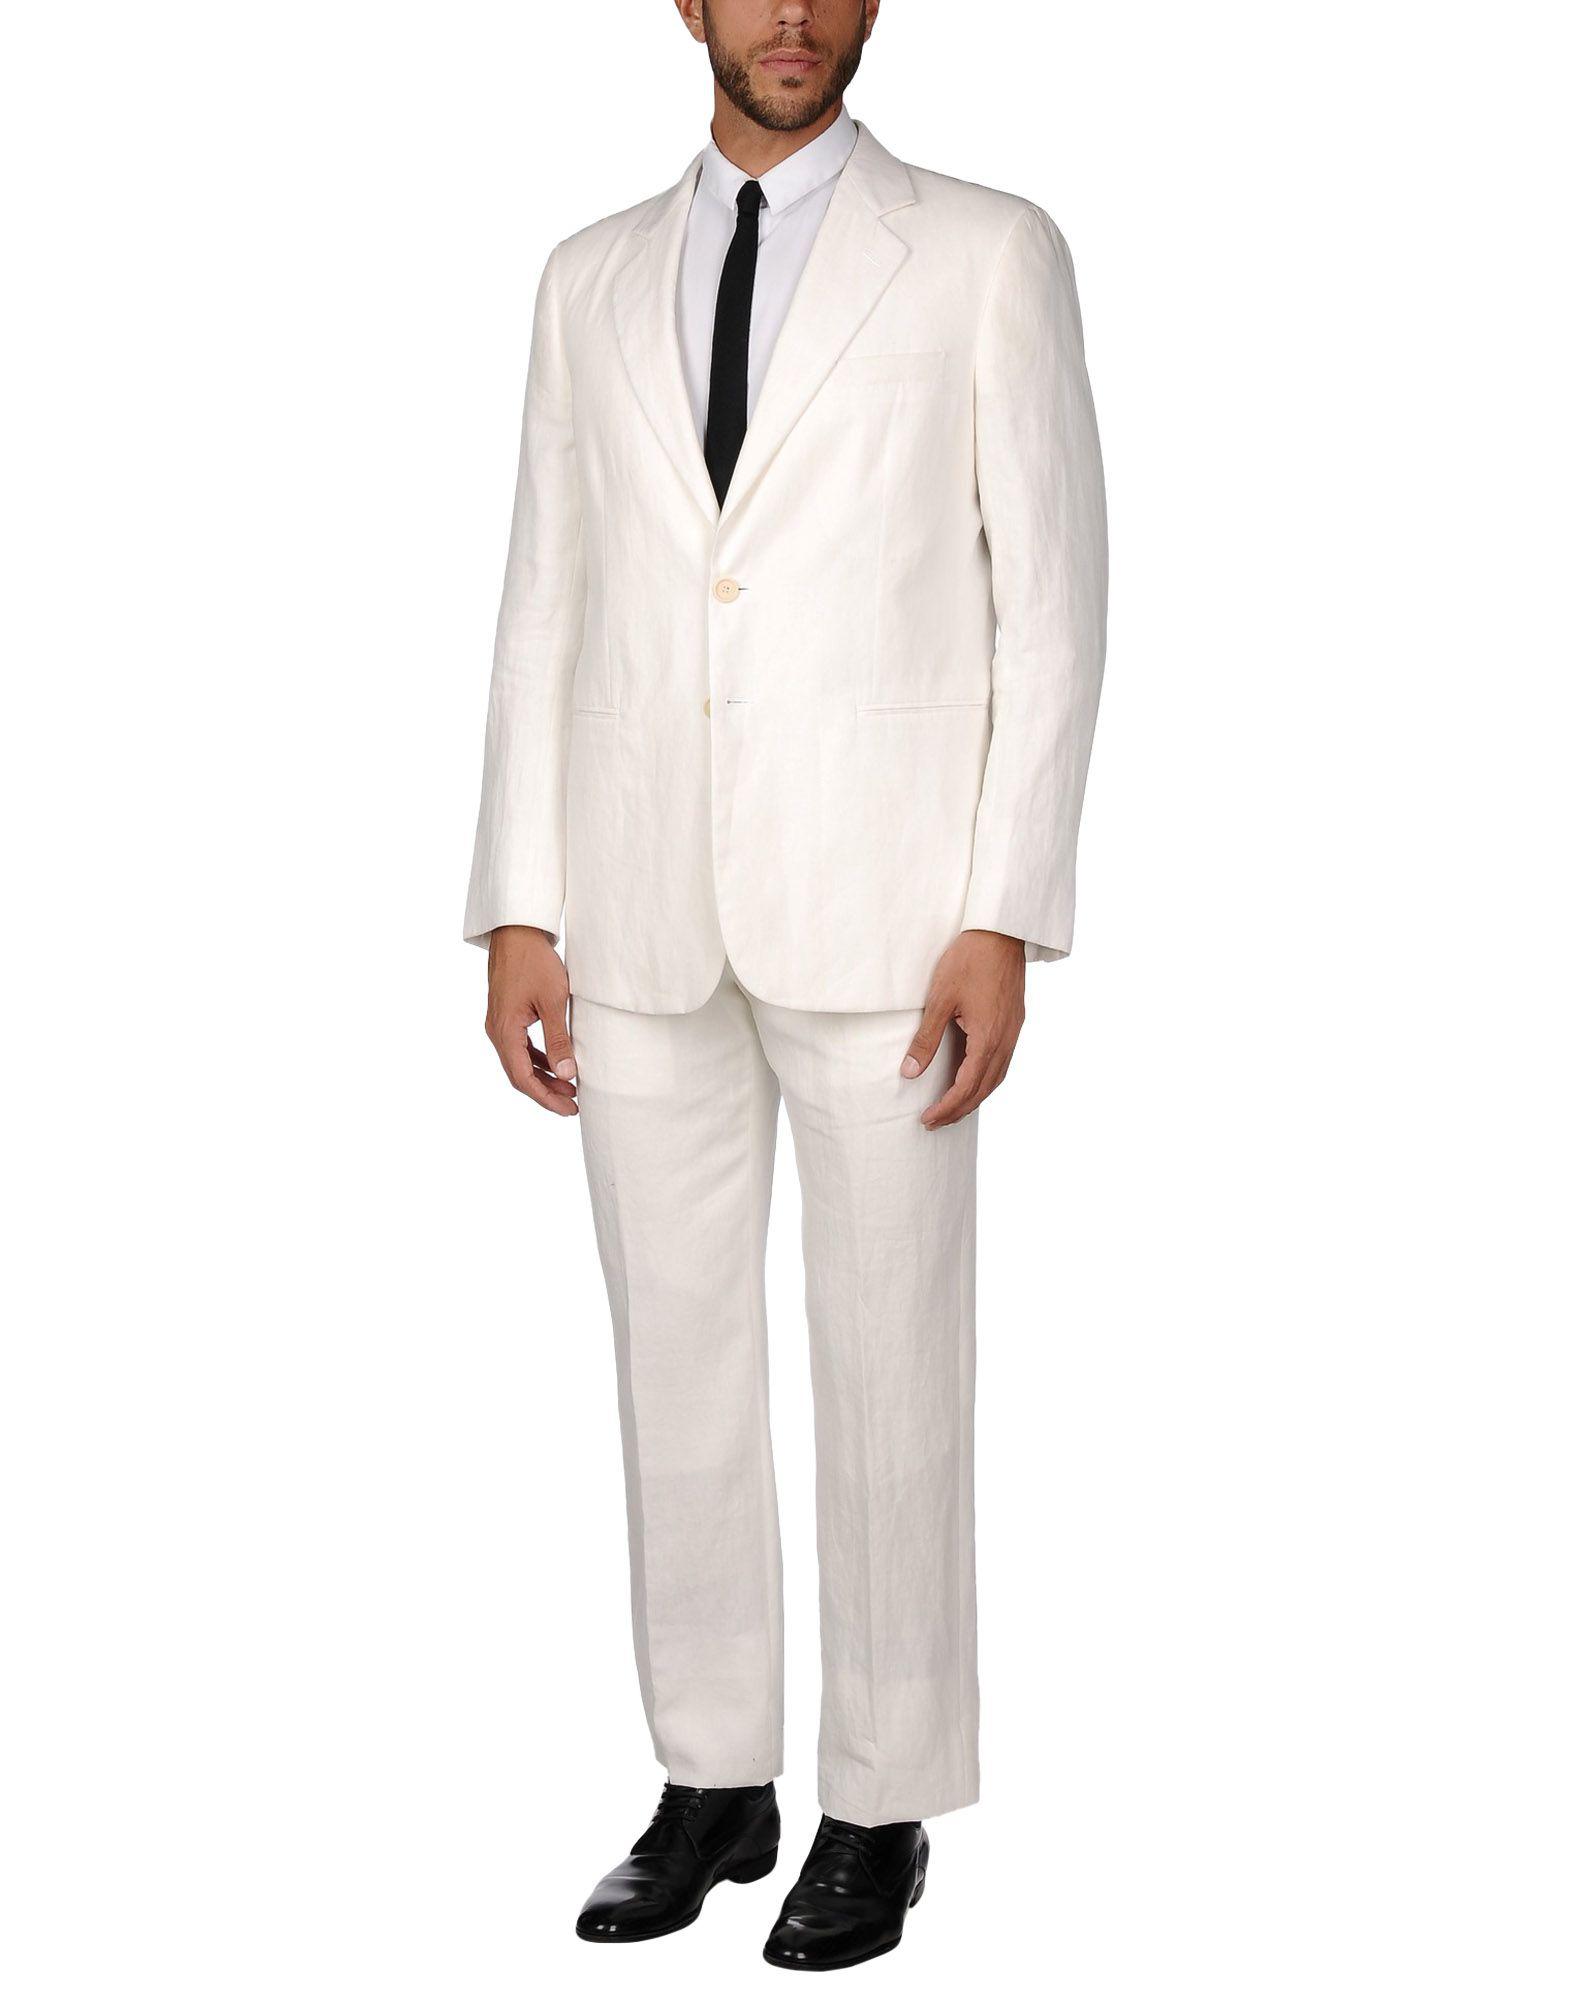 Armani Suits For Men White